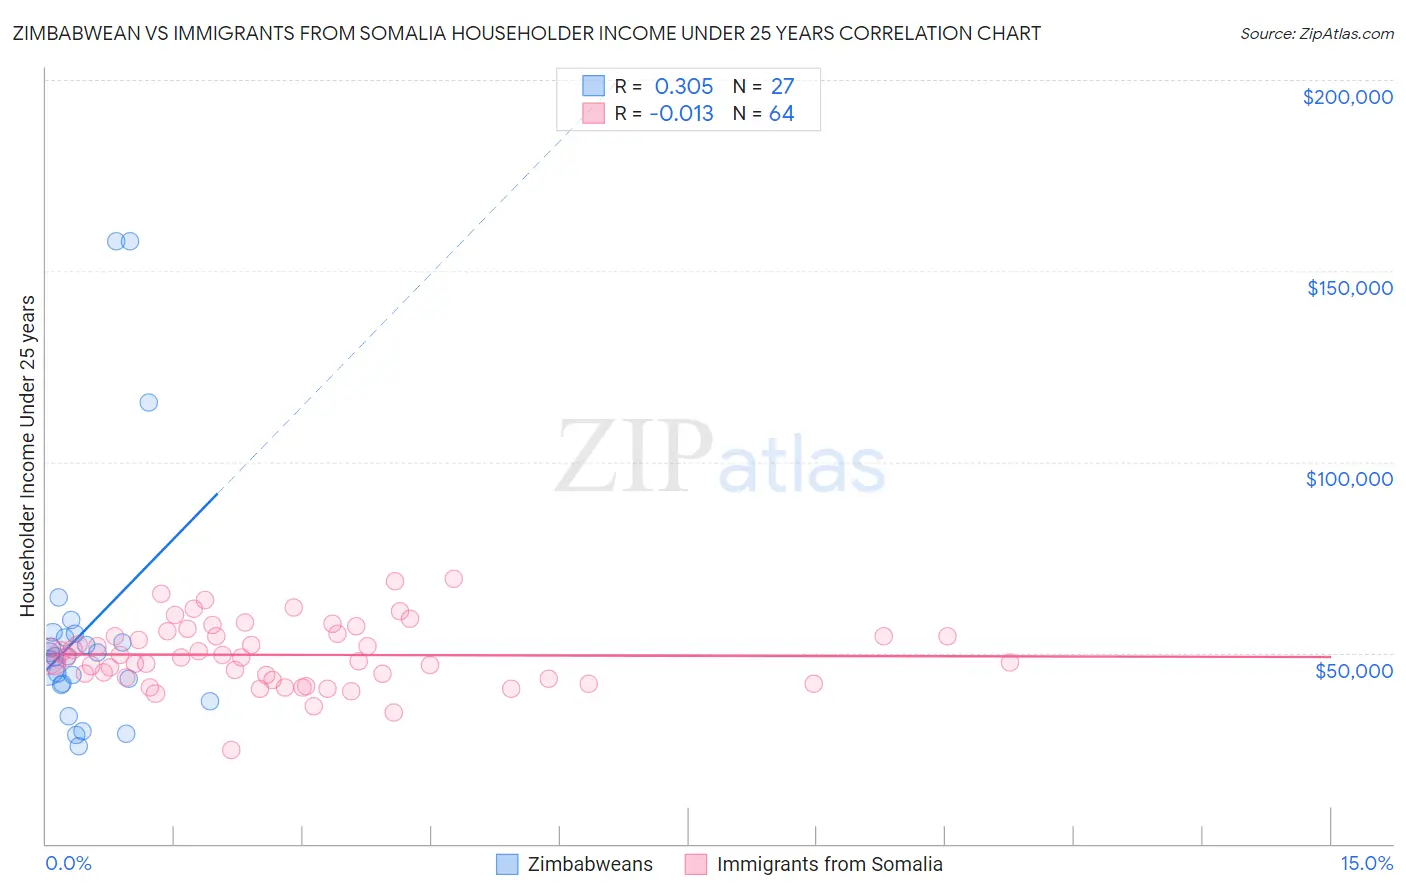 Zimbabwean vs Immigrants from Somalia Householder Income Under 25 years